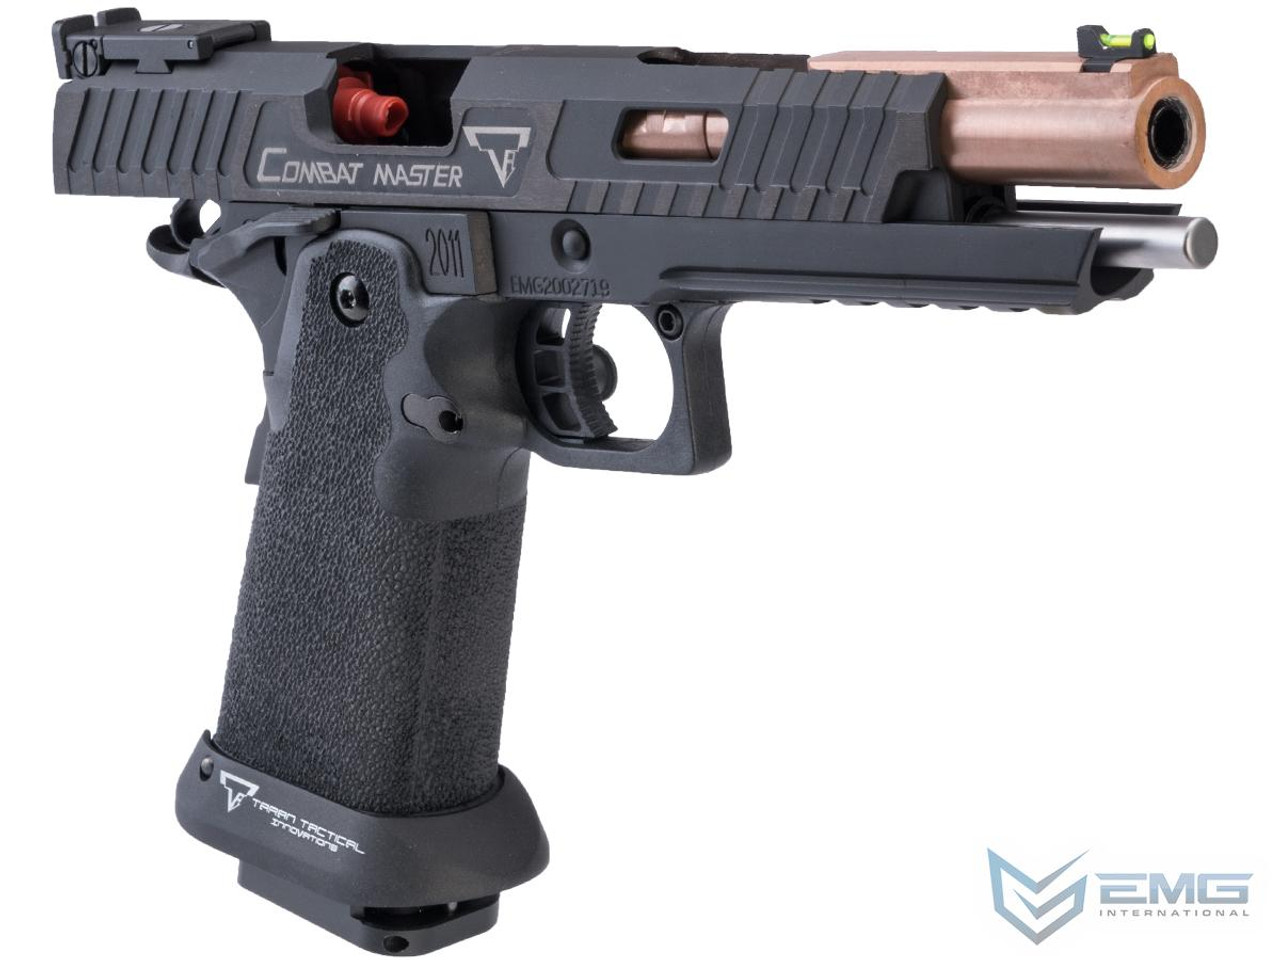 EMG TTI Licensed JW3 2011 Combat Master Select Fire GBB Pistol 